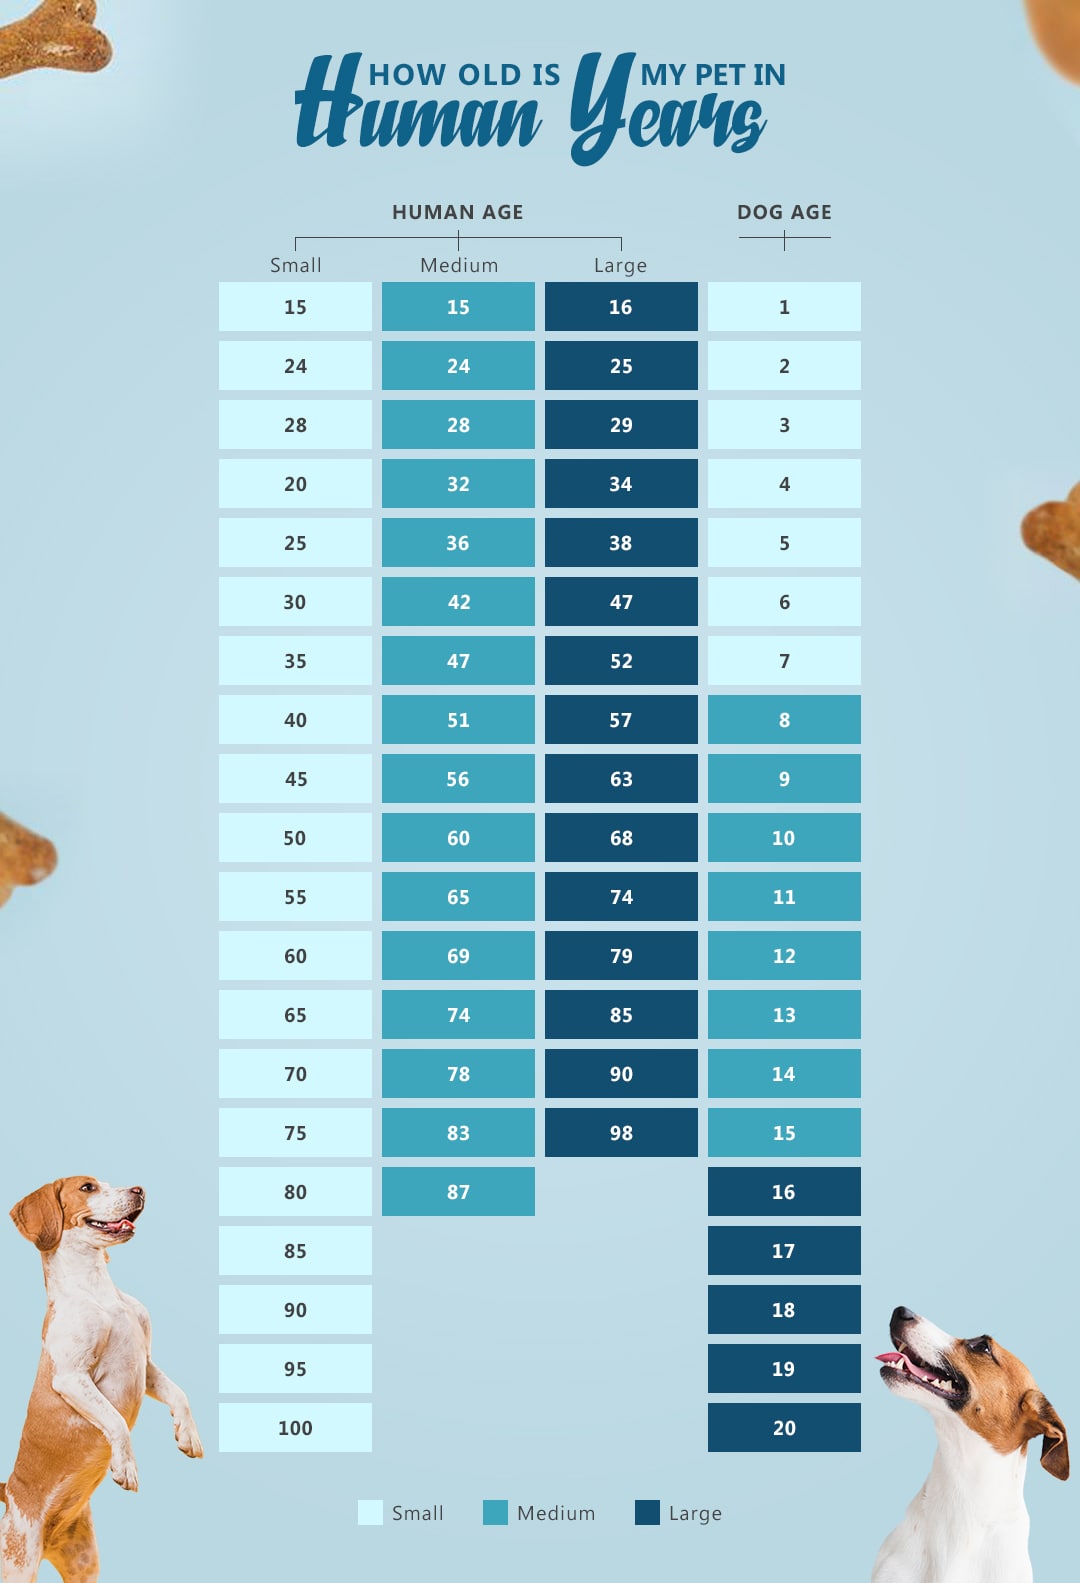 how do we calculate dog years